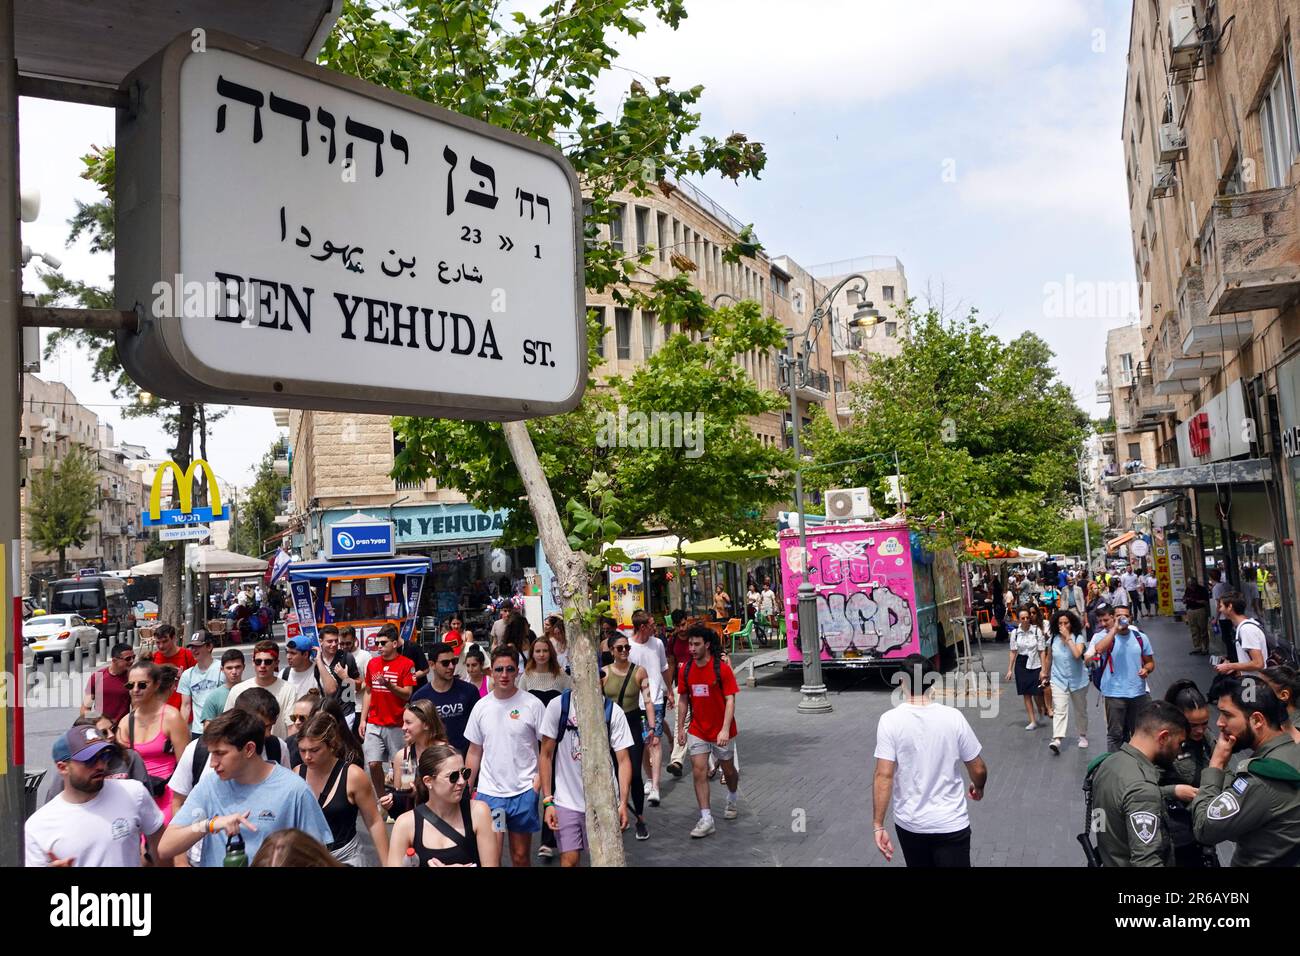 Panneau de signalisation Ben Yehuda Street Banque D'Images